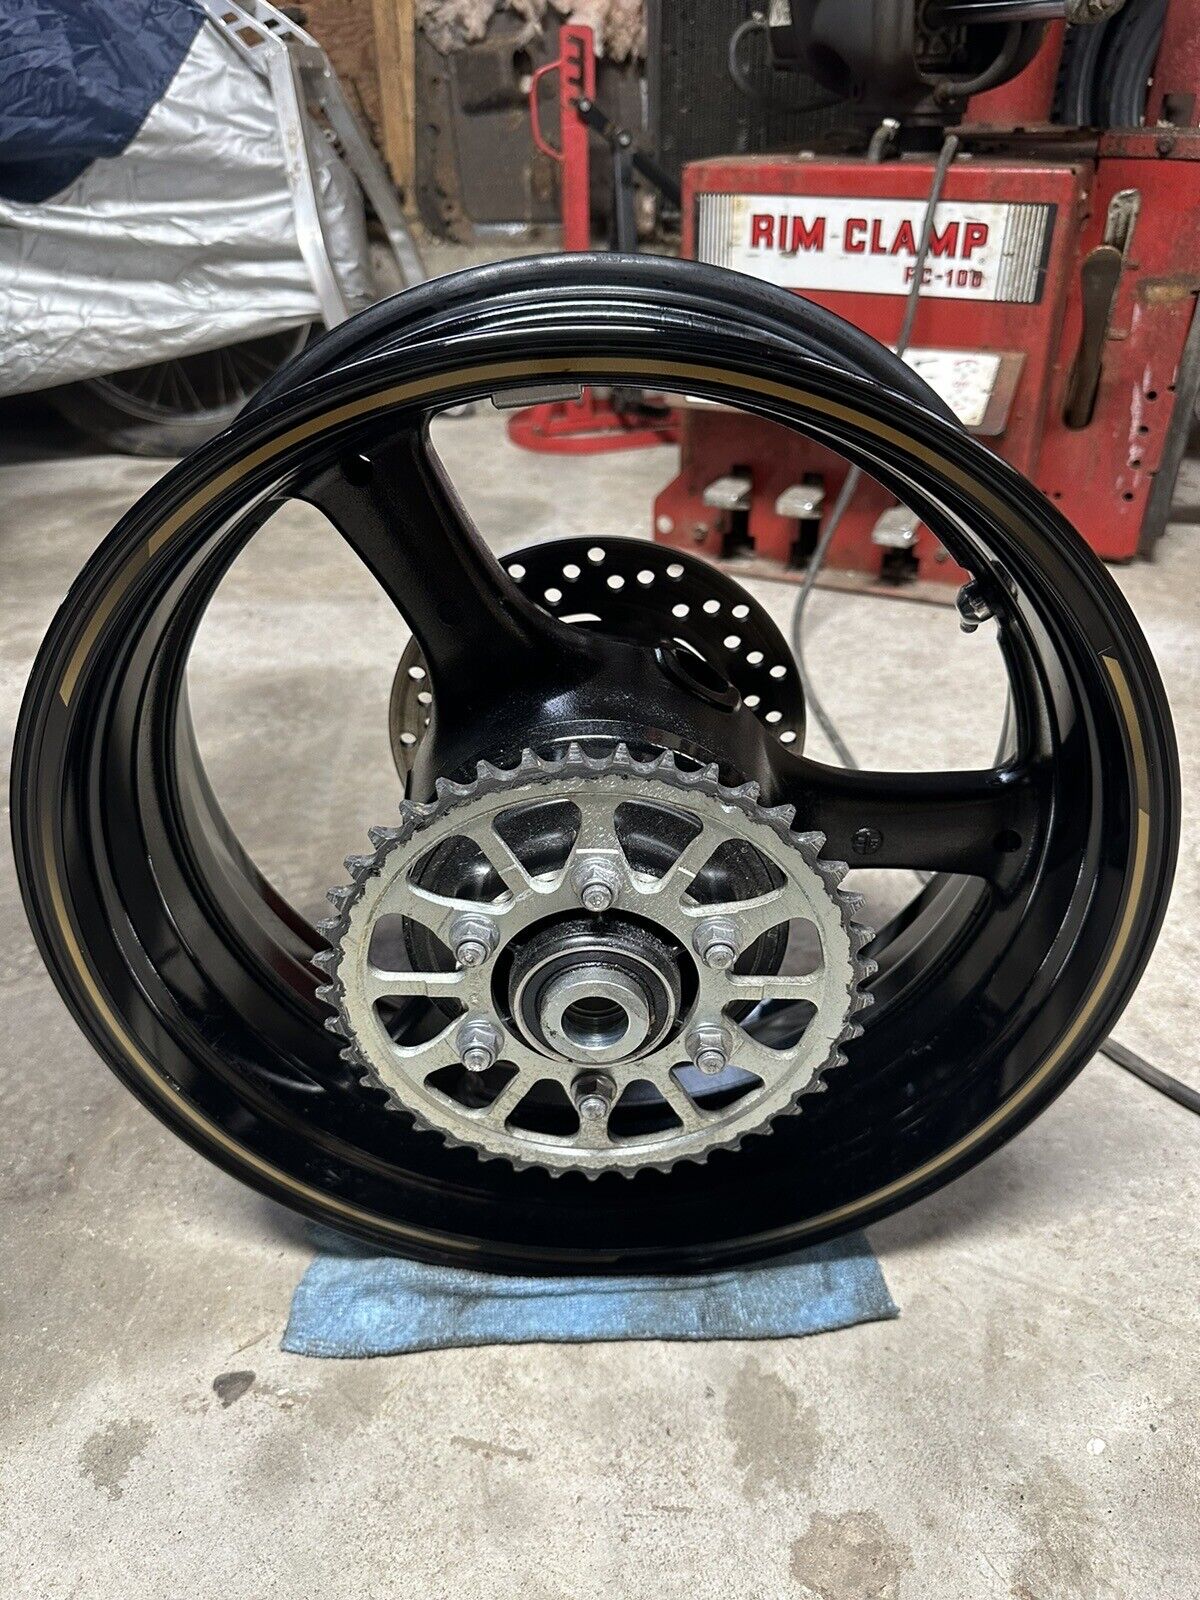 21-23 Kawasaki Zx10r Rear Wheel, Brake Rotor, Sprocket, Spacers, Back Wheel